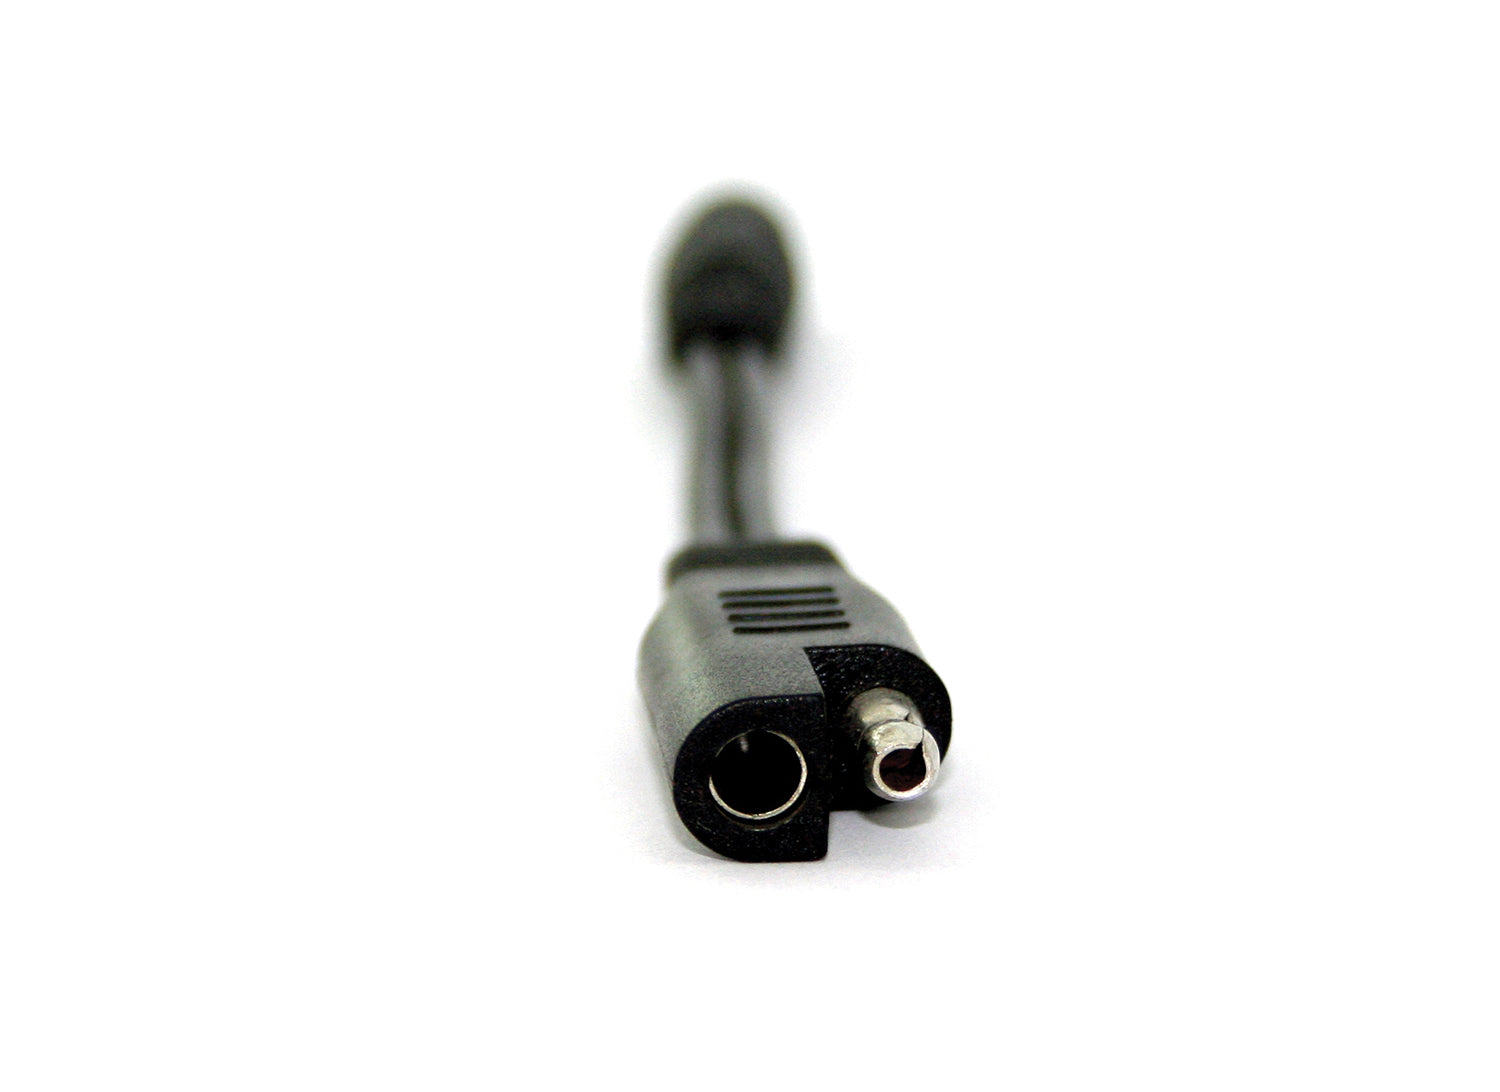 Adaptor for a OptiMate SAE power plug to a Keis heated clothing power plug